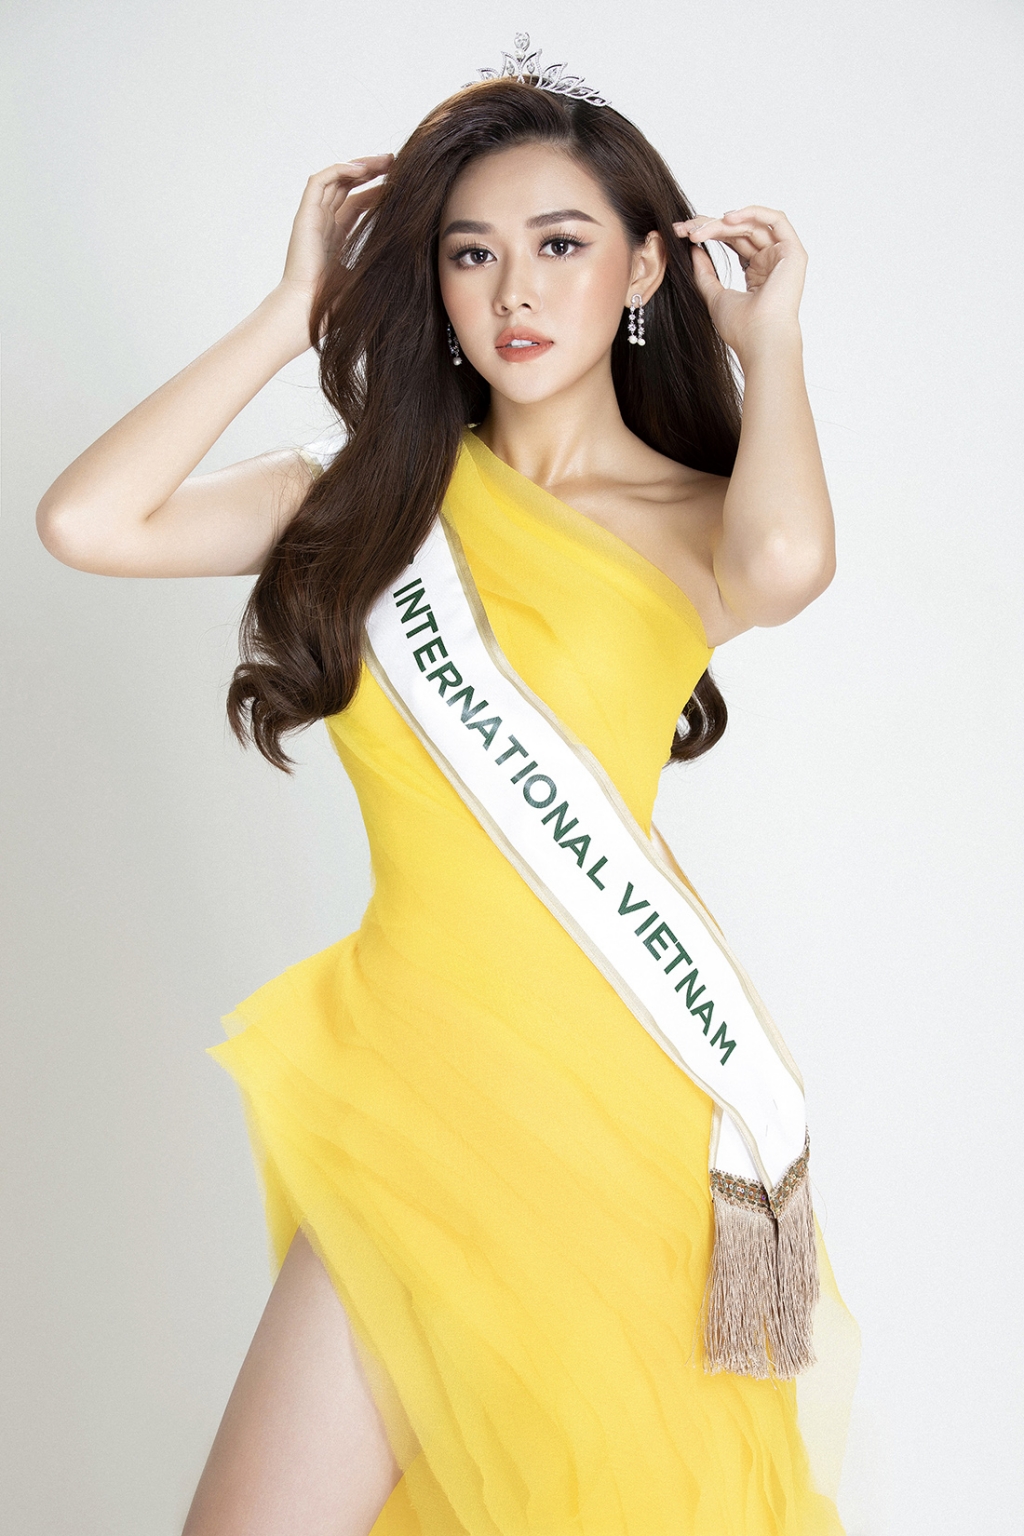 miss international bat ngo cong bo top 10 trang phuc da hoi co ten tuong san